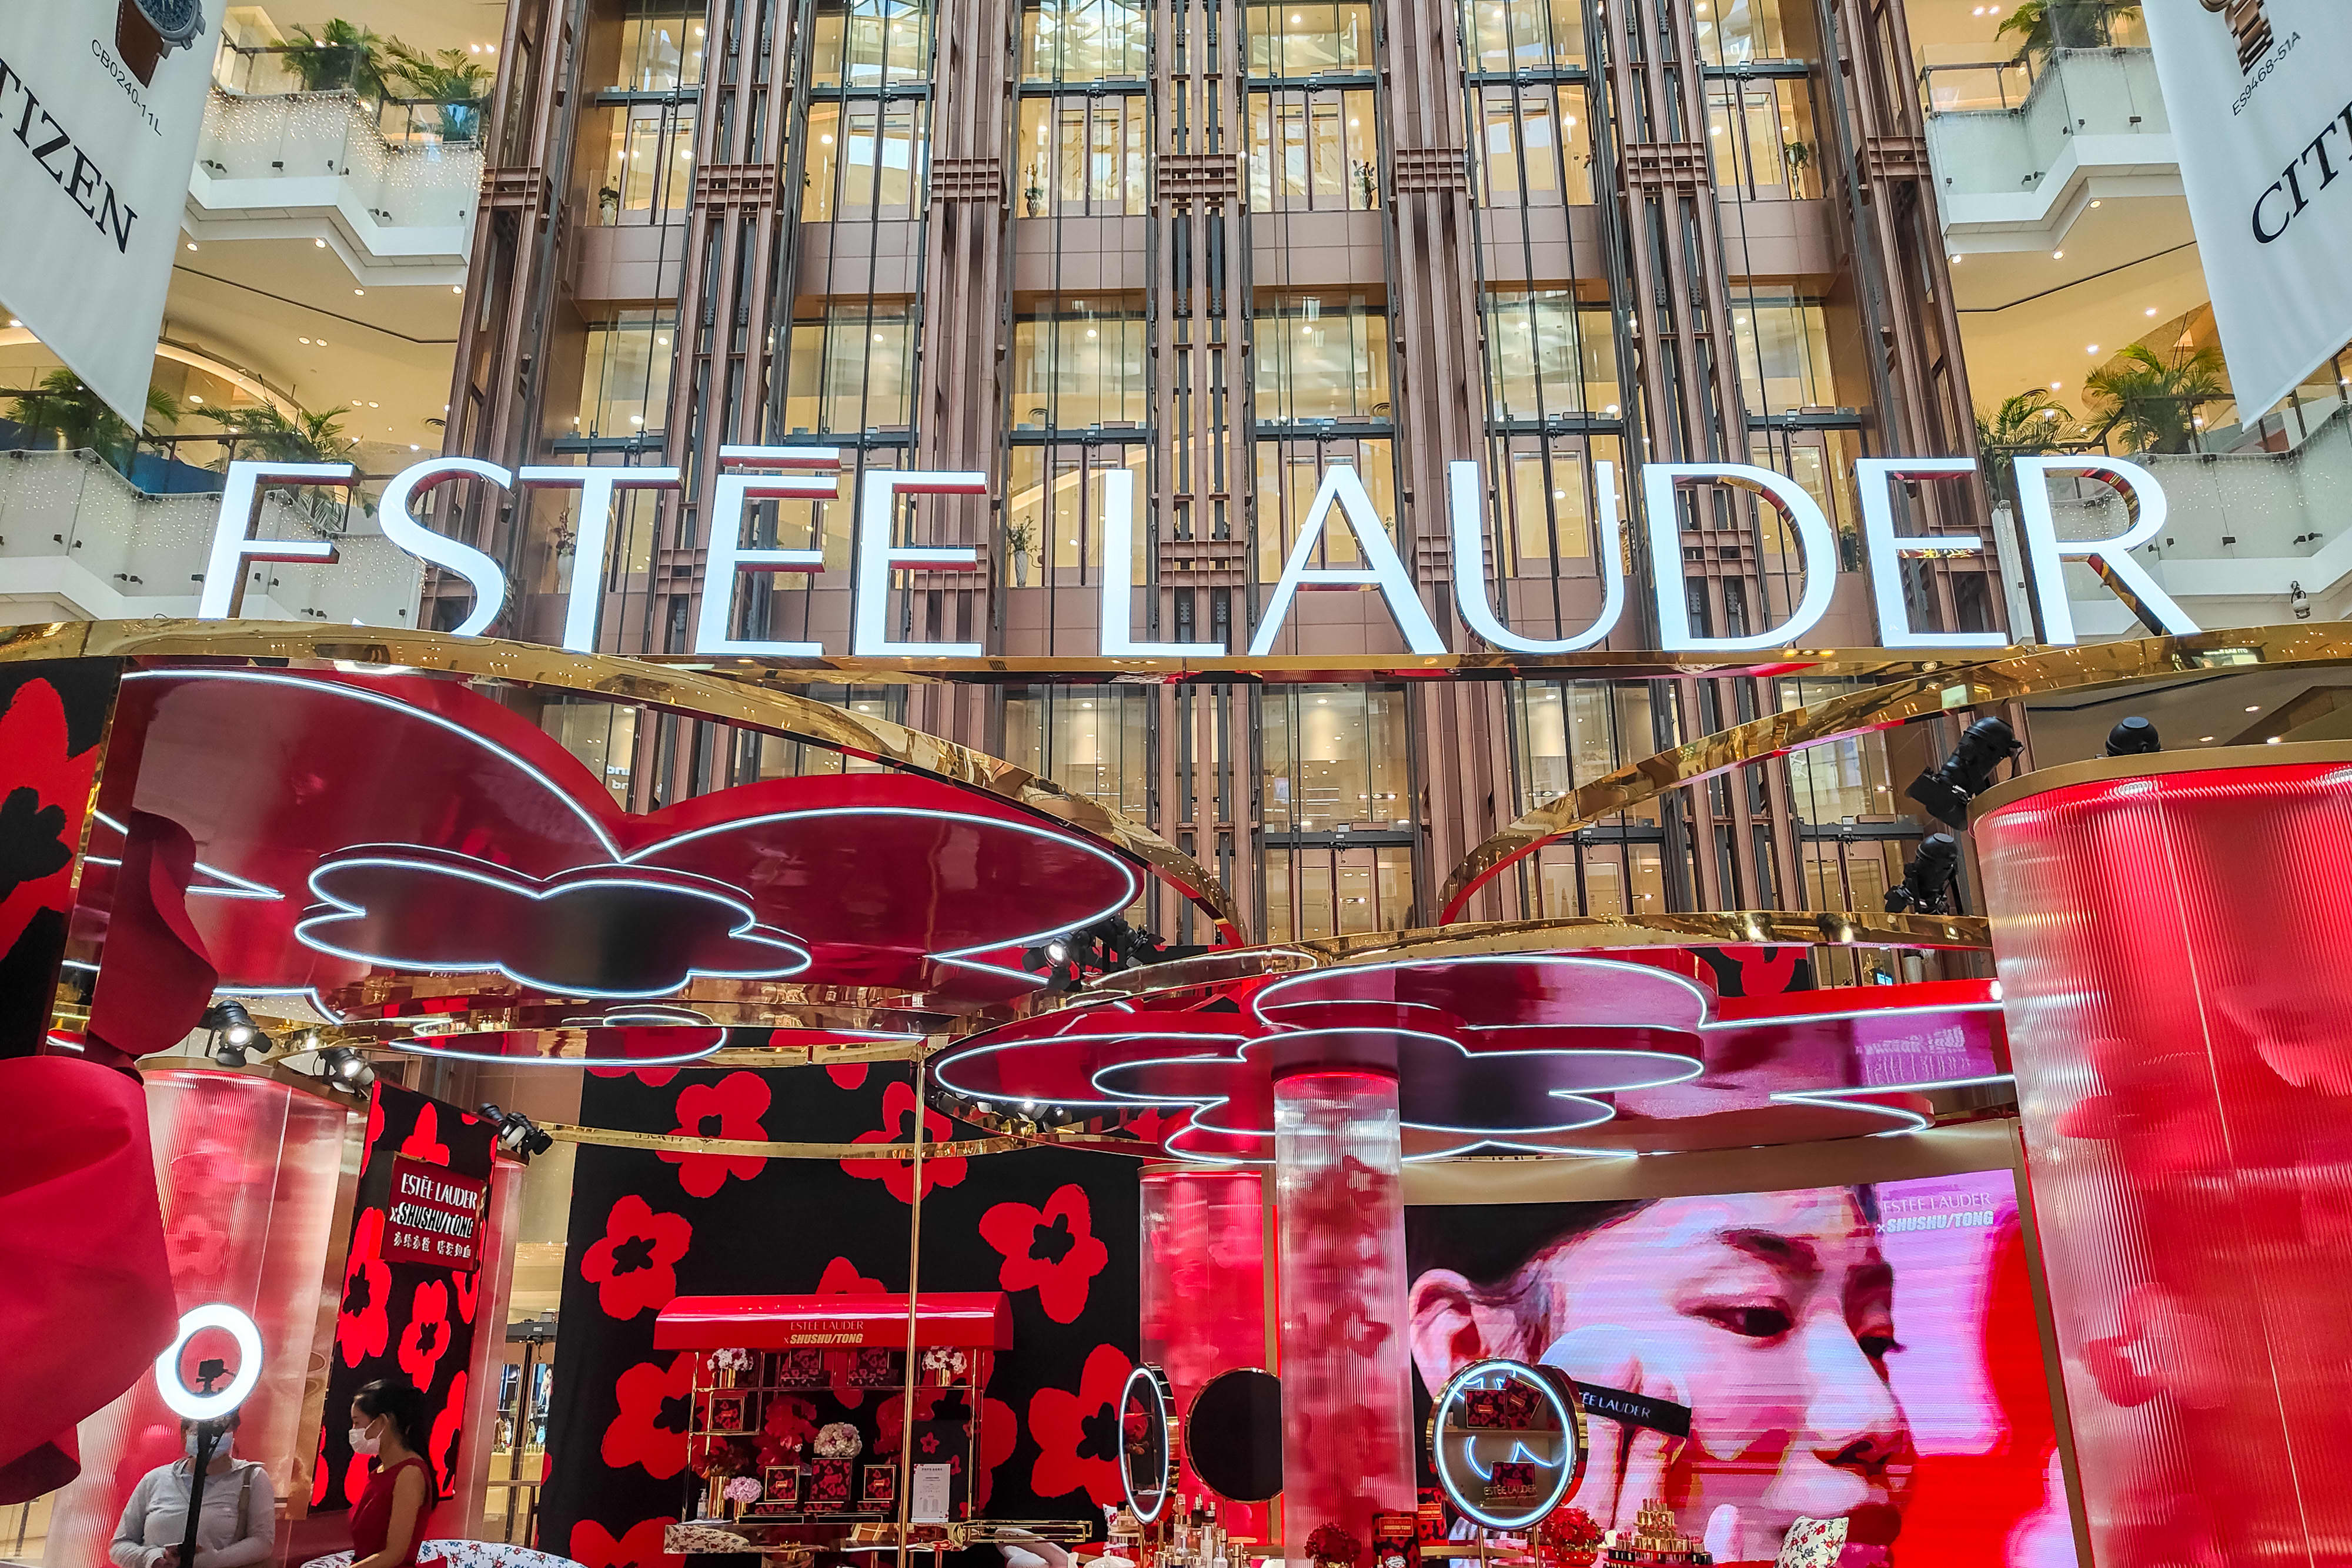 Estee Lauder's latest Wall Street endorsement underscores our view